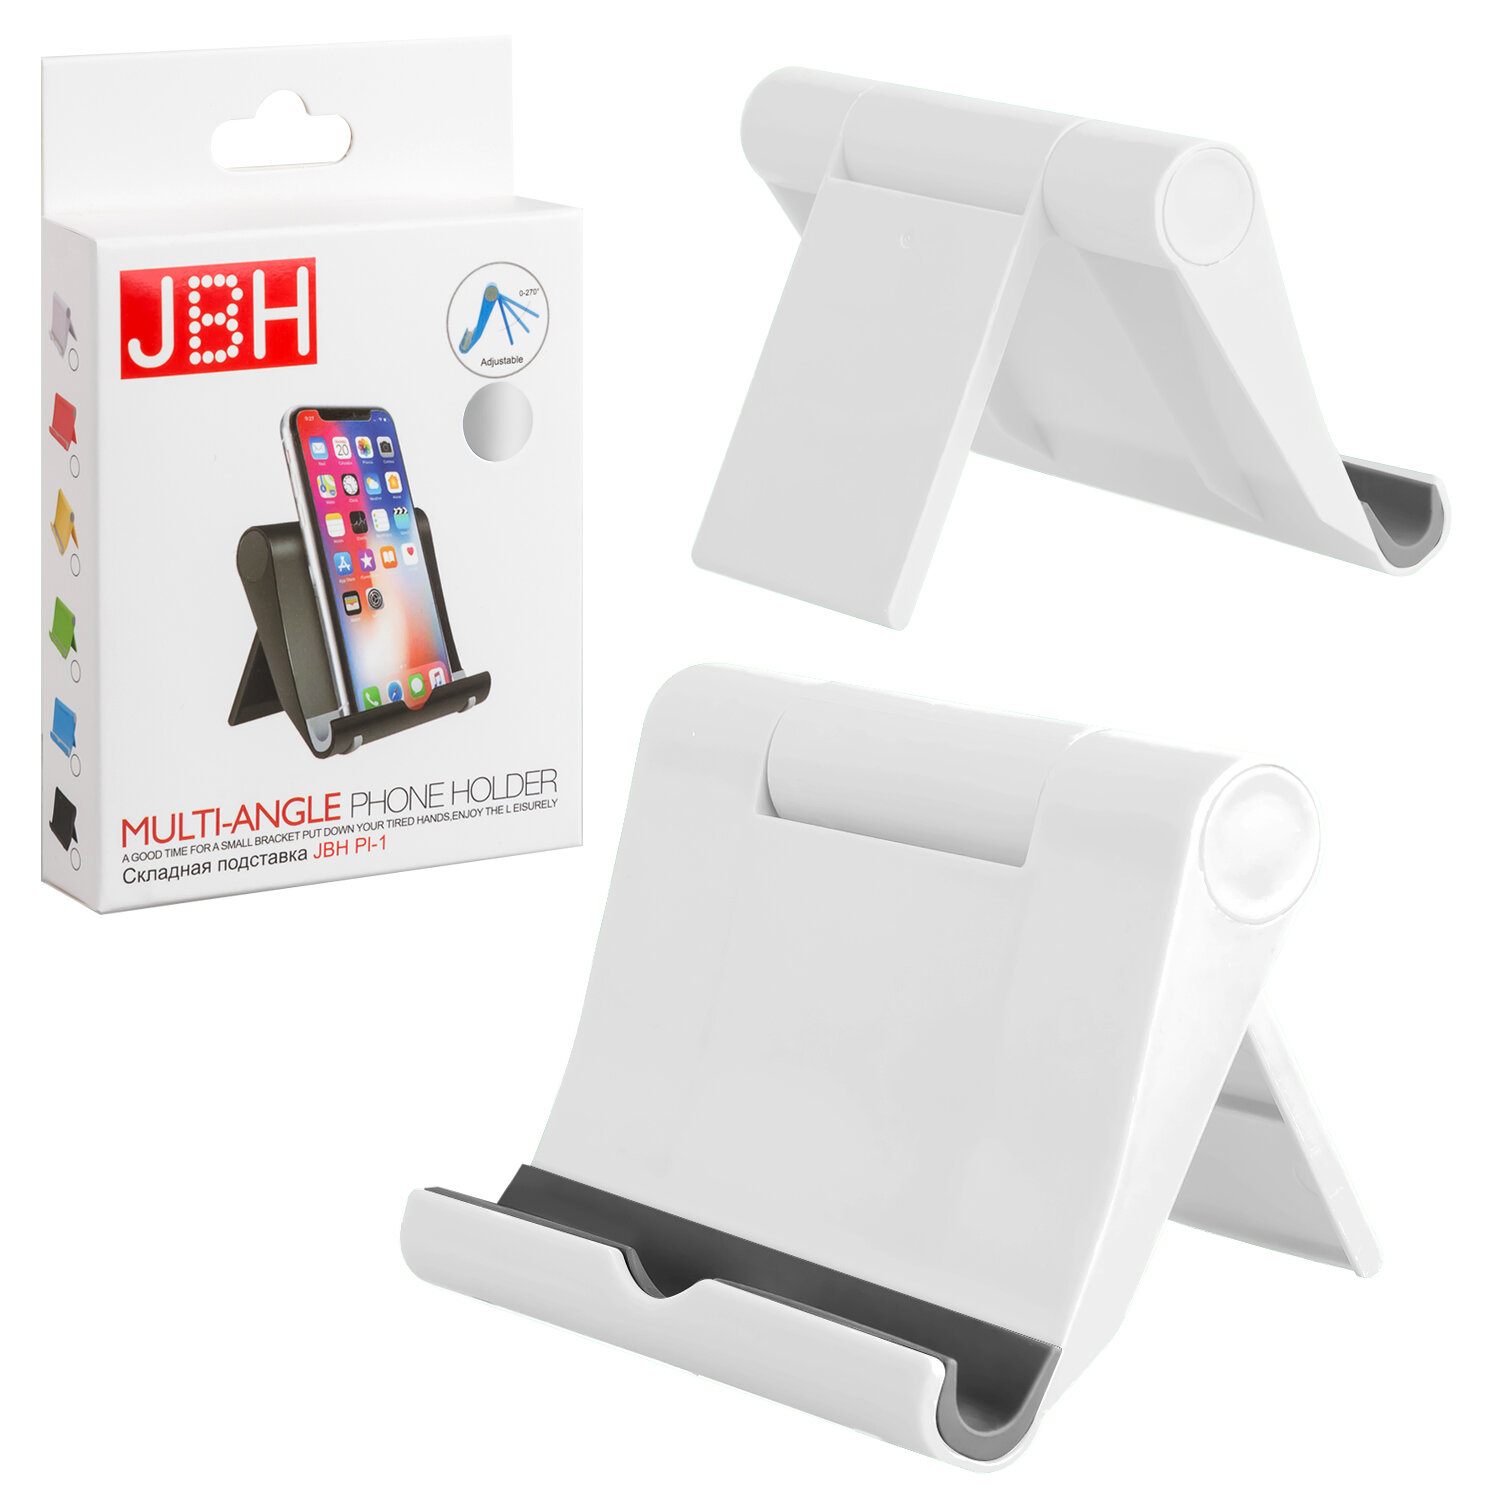 Складная подставка для телефона JBH PI-1 белая